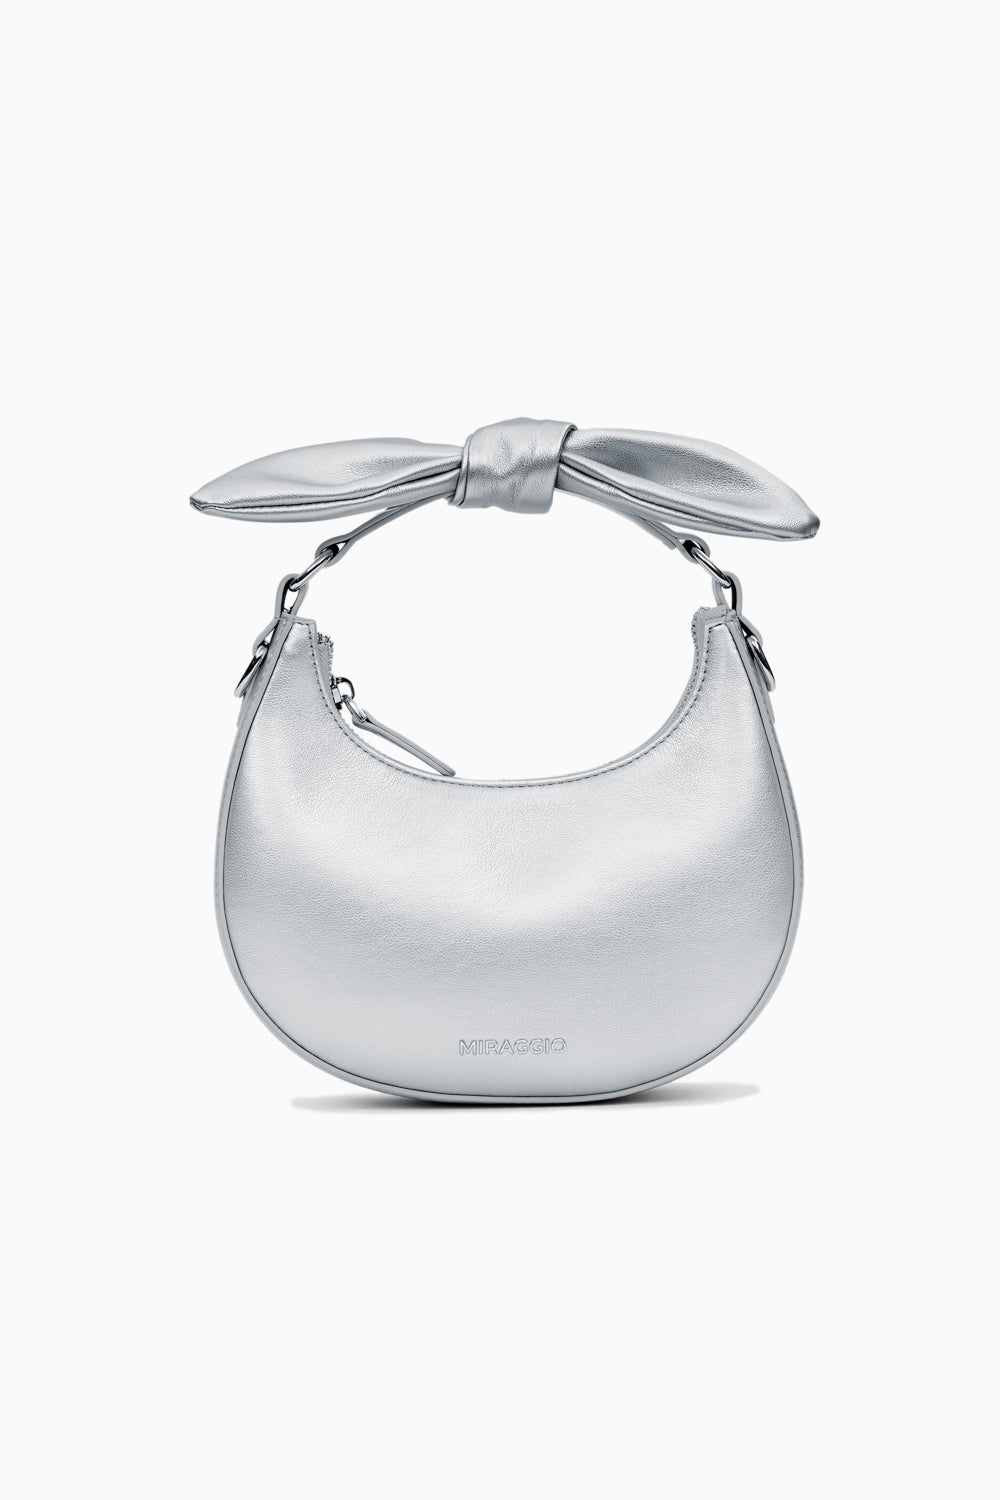 Cupid Metallic Silver Bow Crossbody Bag